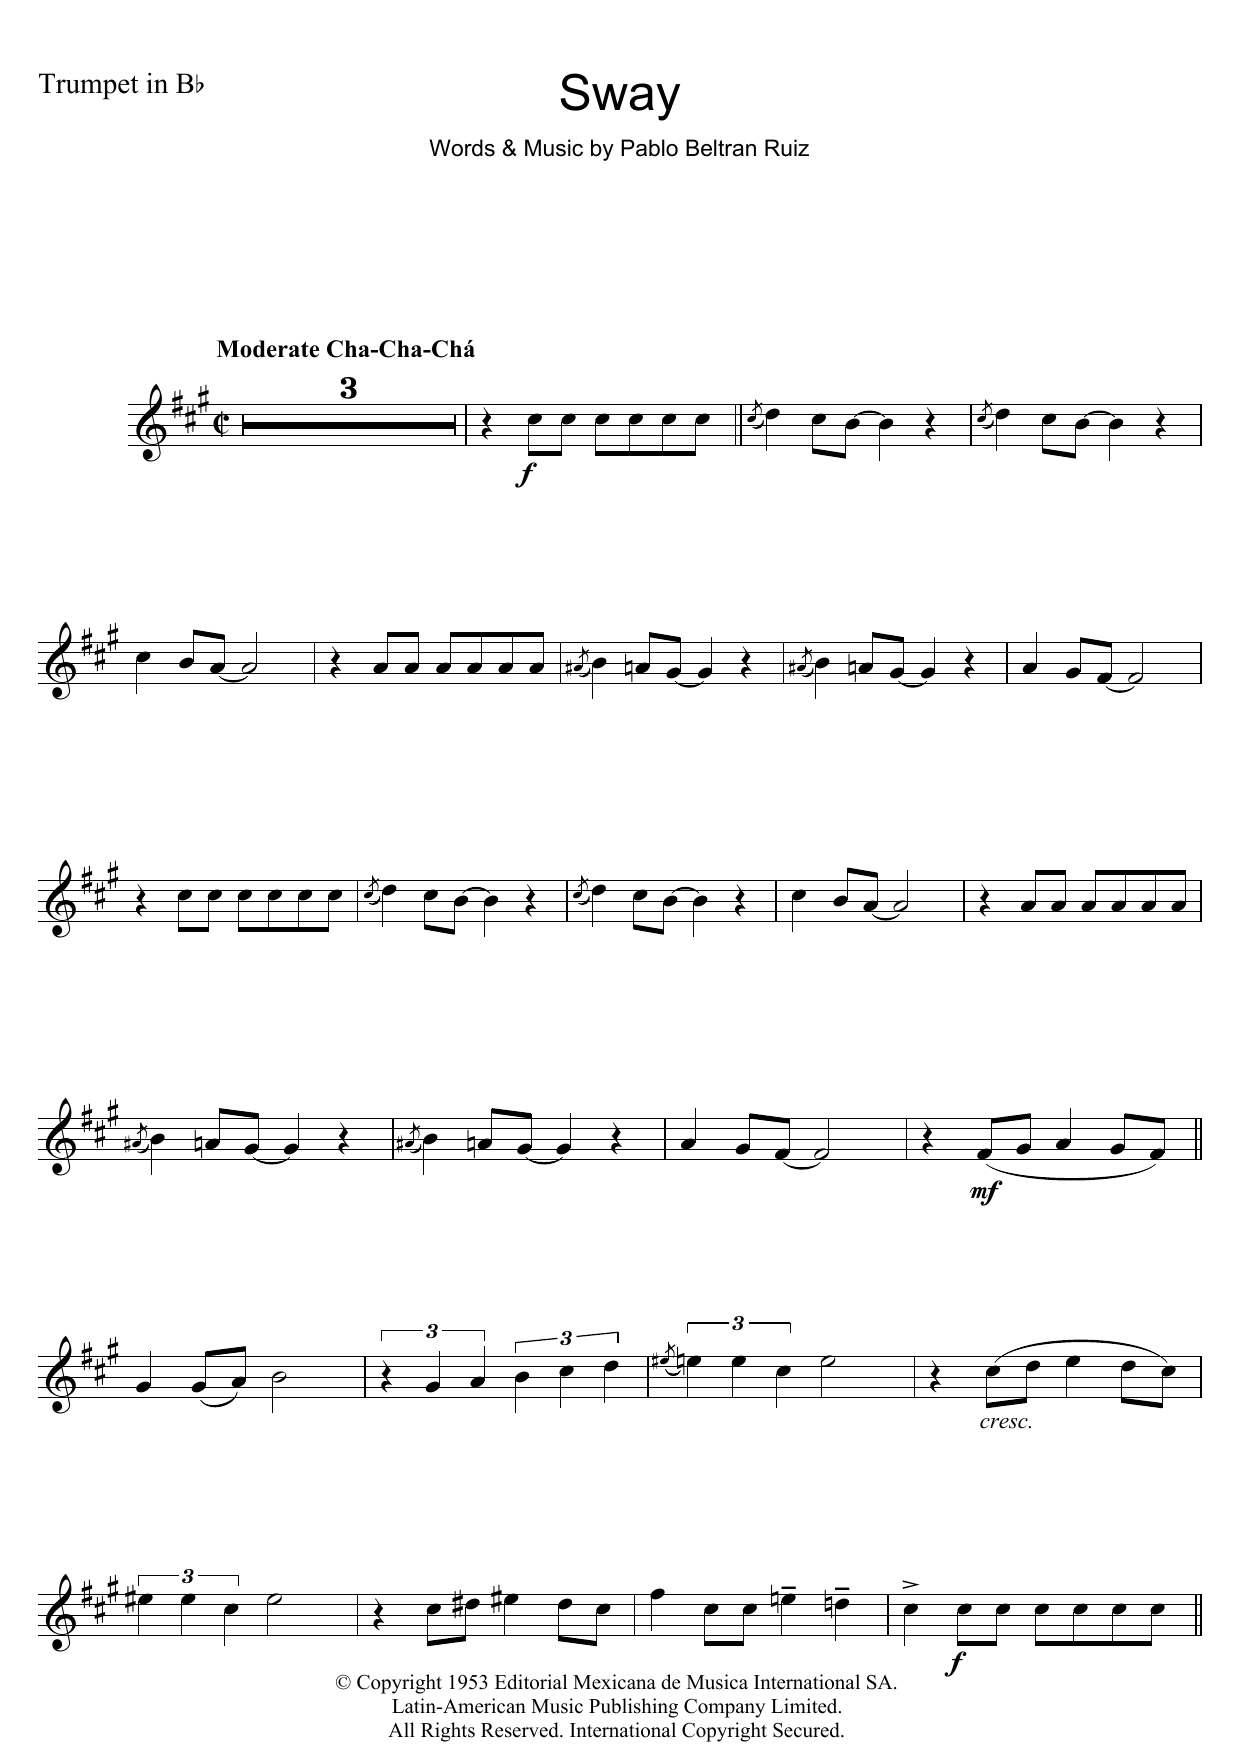 Pablo Beltran Ruiz Sway (Quien Sera) Sheet Music Notes & Chords for Alto Saxophone - Download or Print PDF